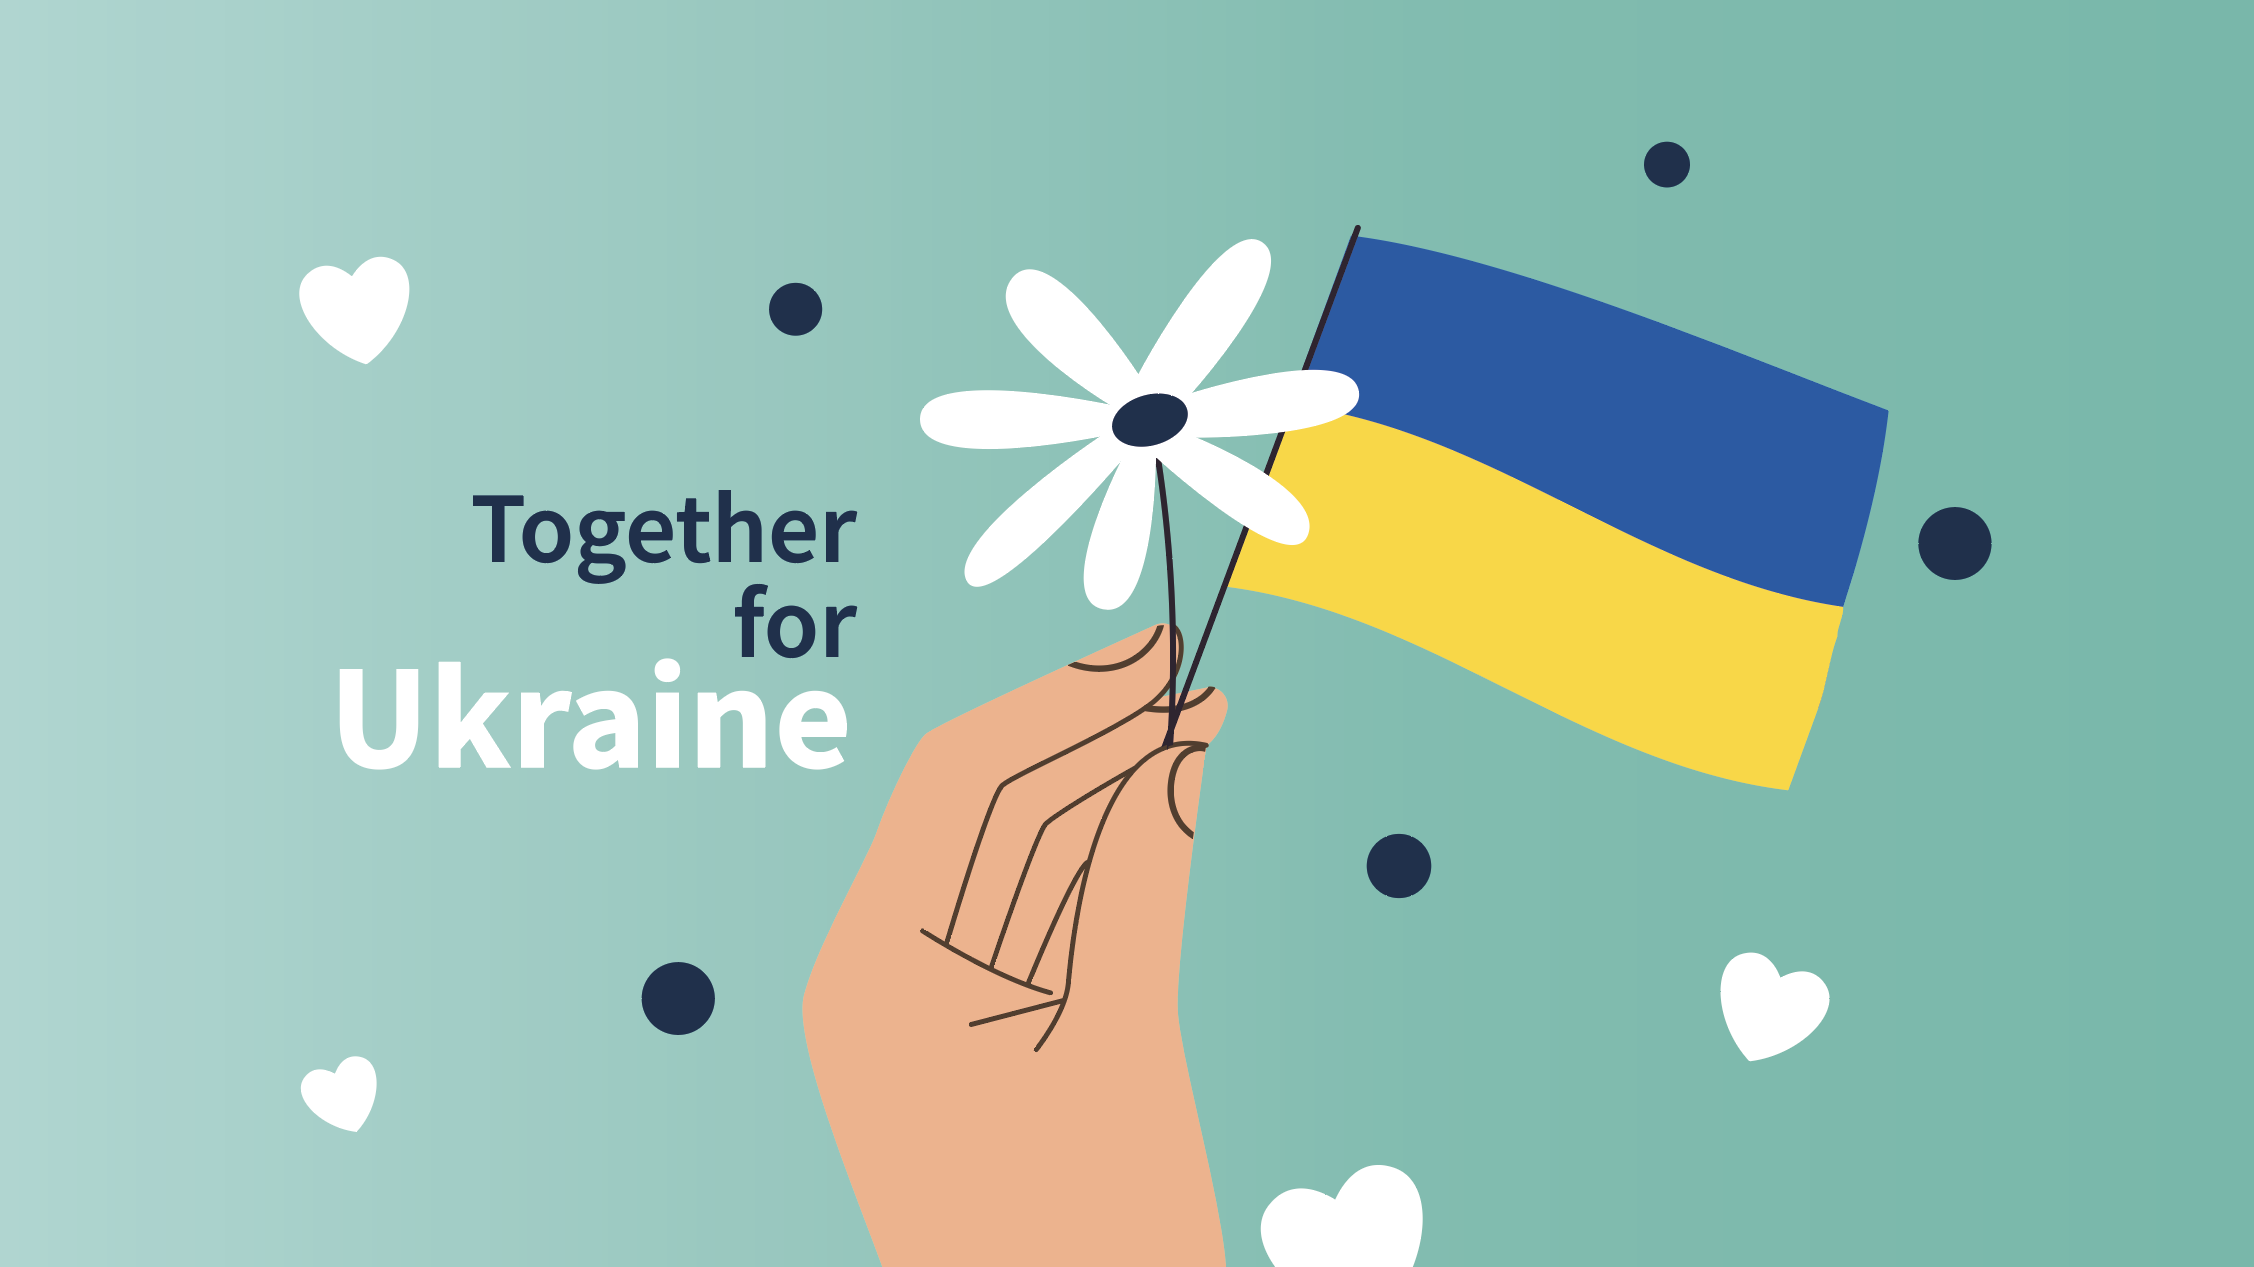 Ukraine – It's the people that count
